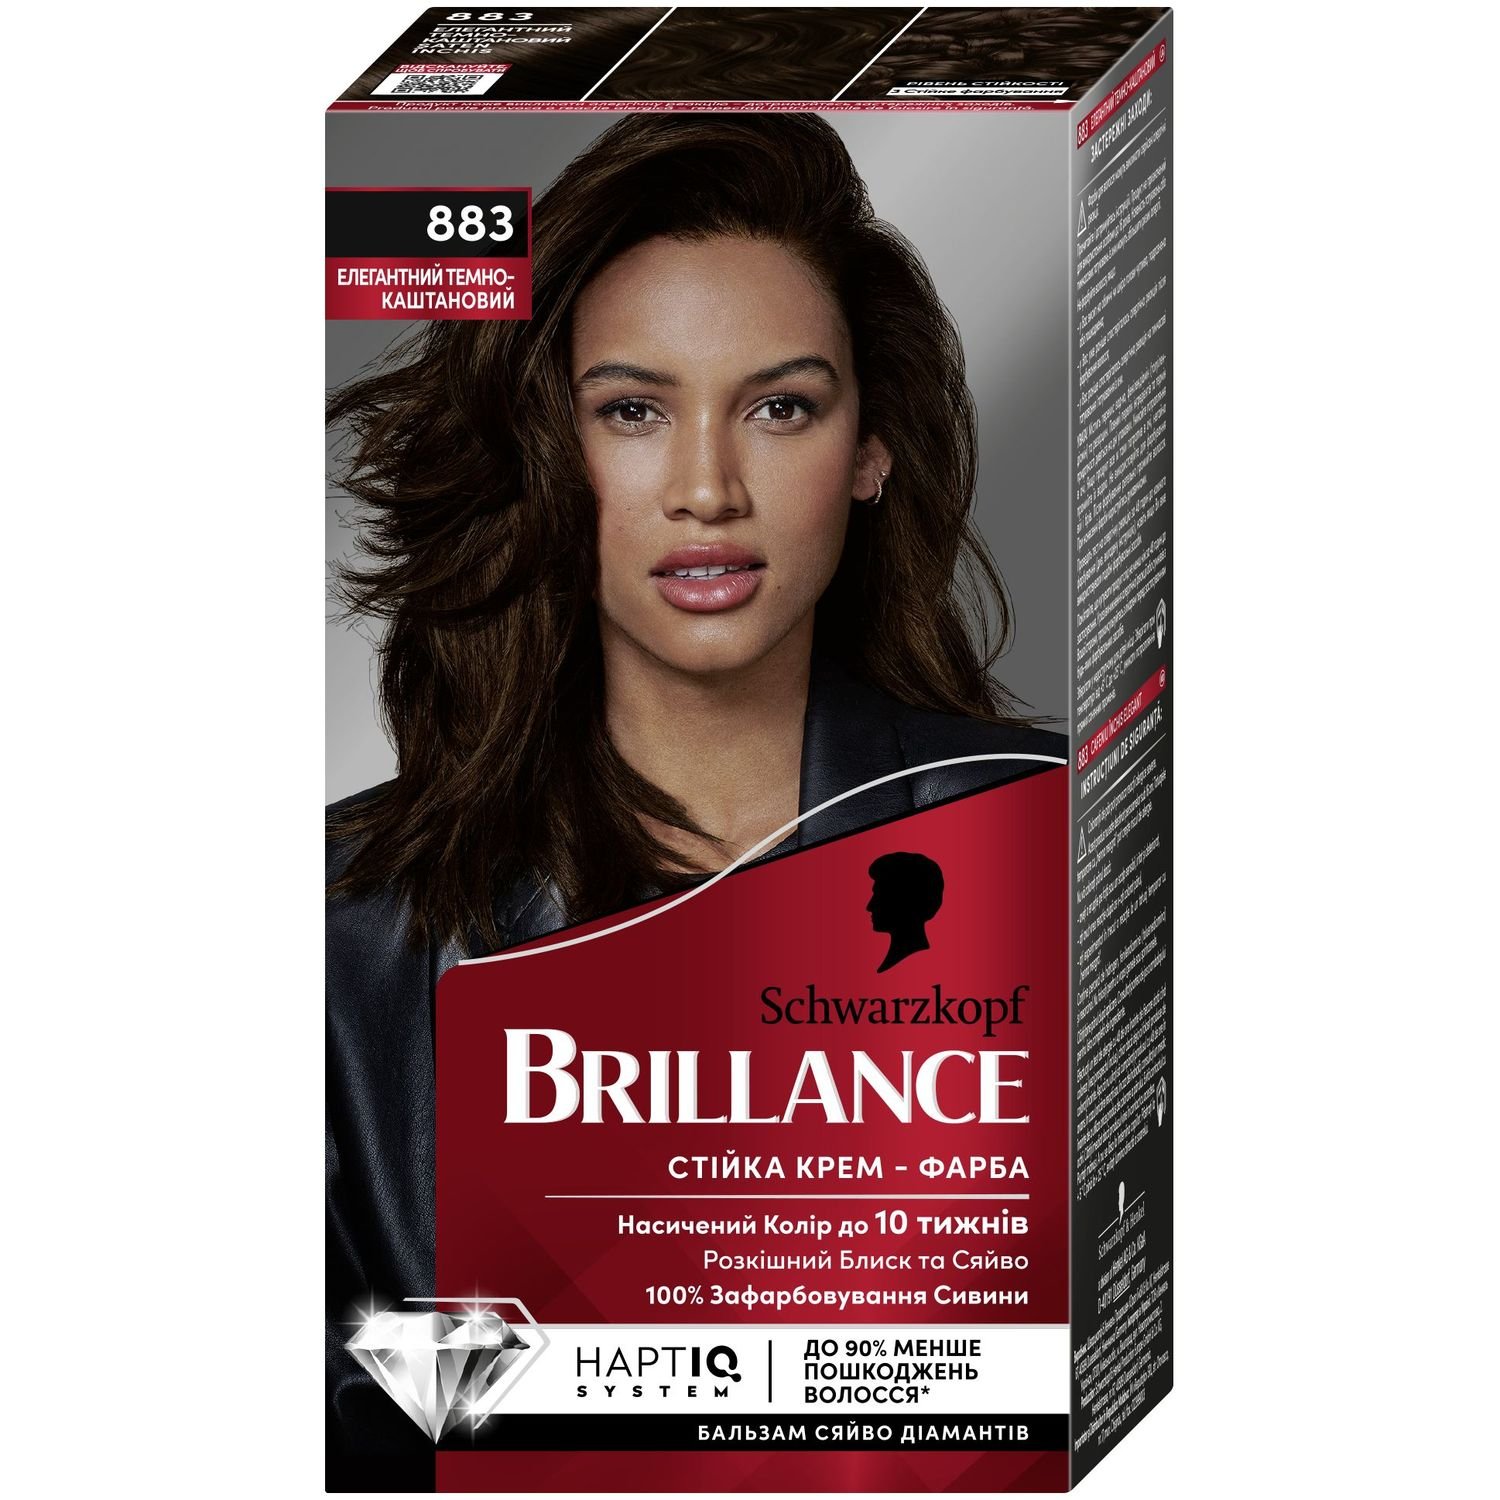 Краска для волос Brillance 883 Элегантный каштан, 143,7 мл (2024985) - фото 1